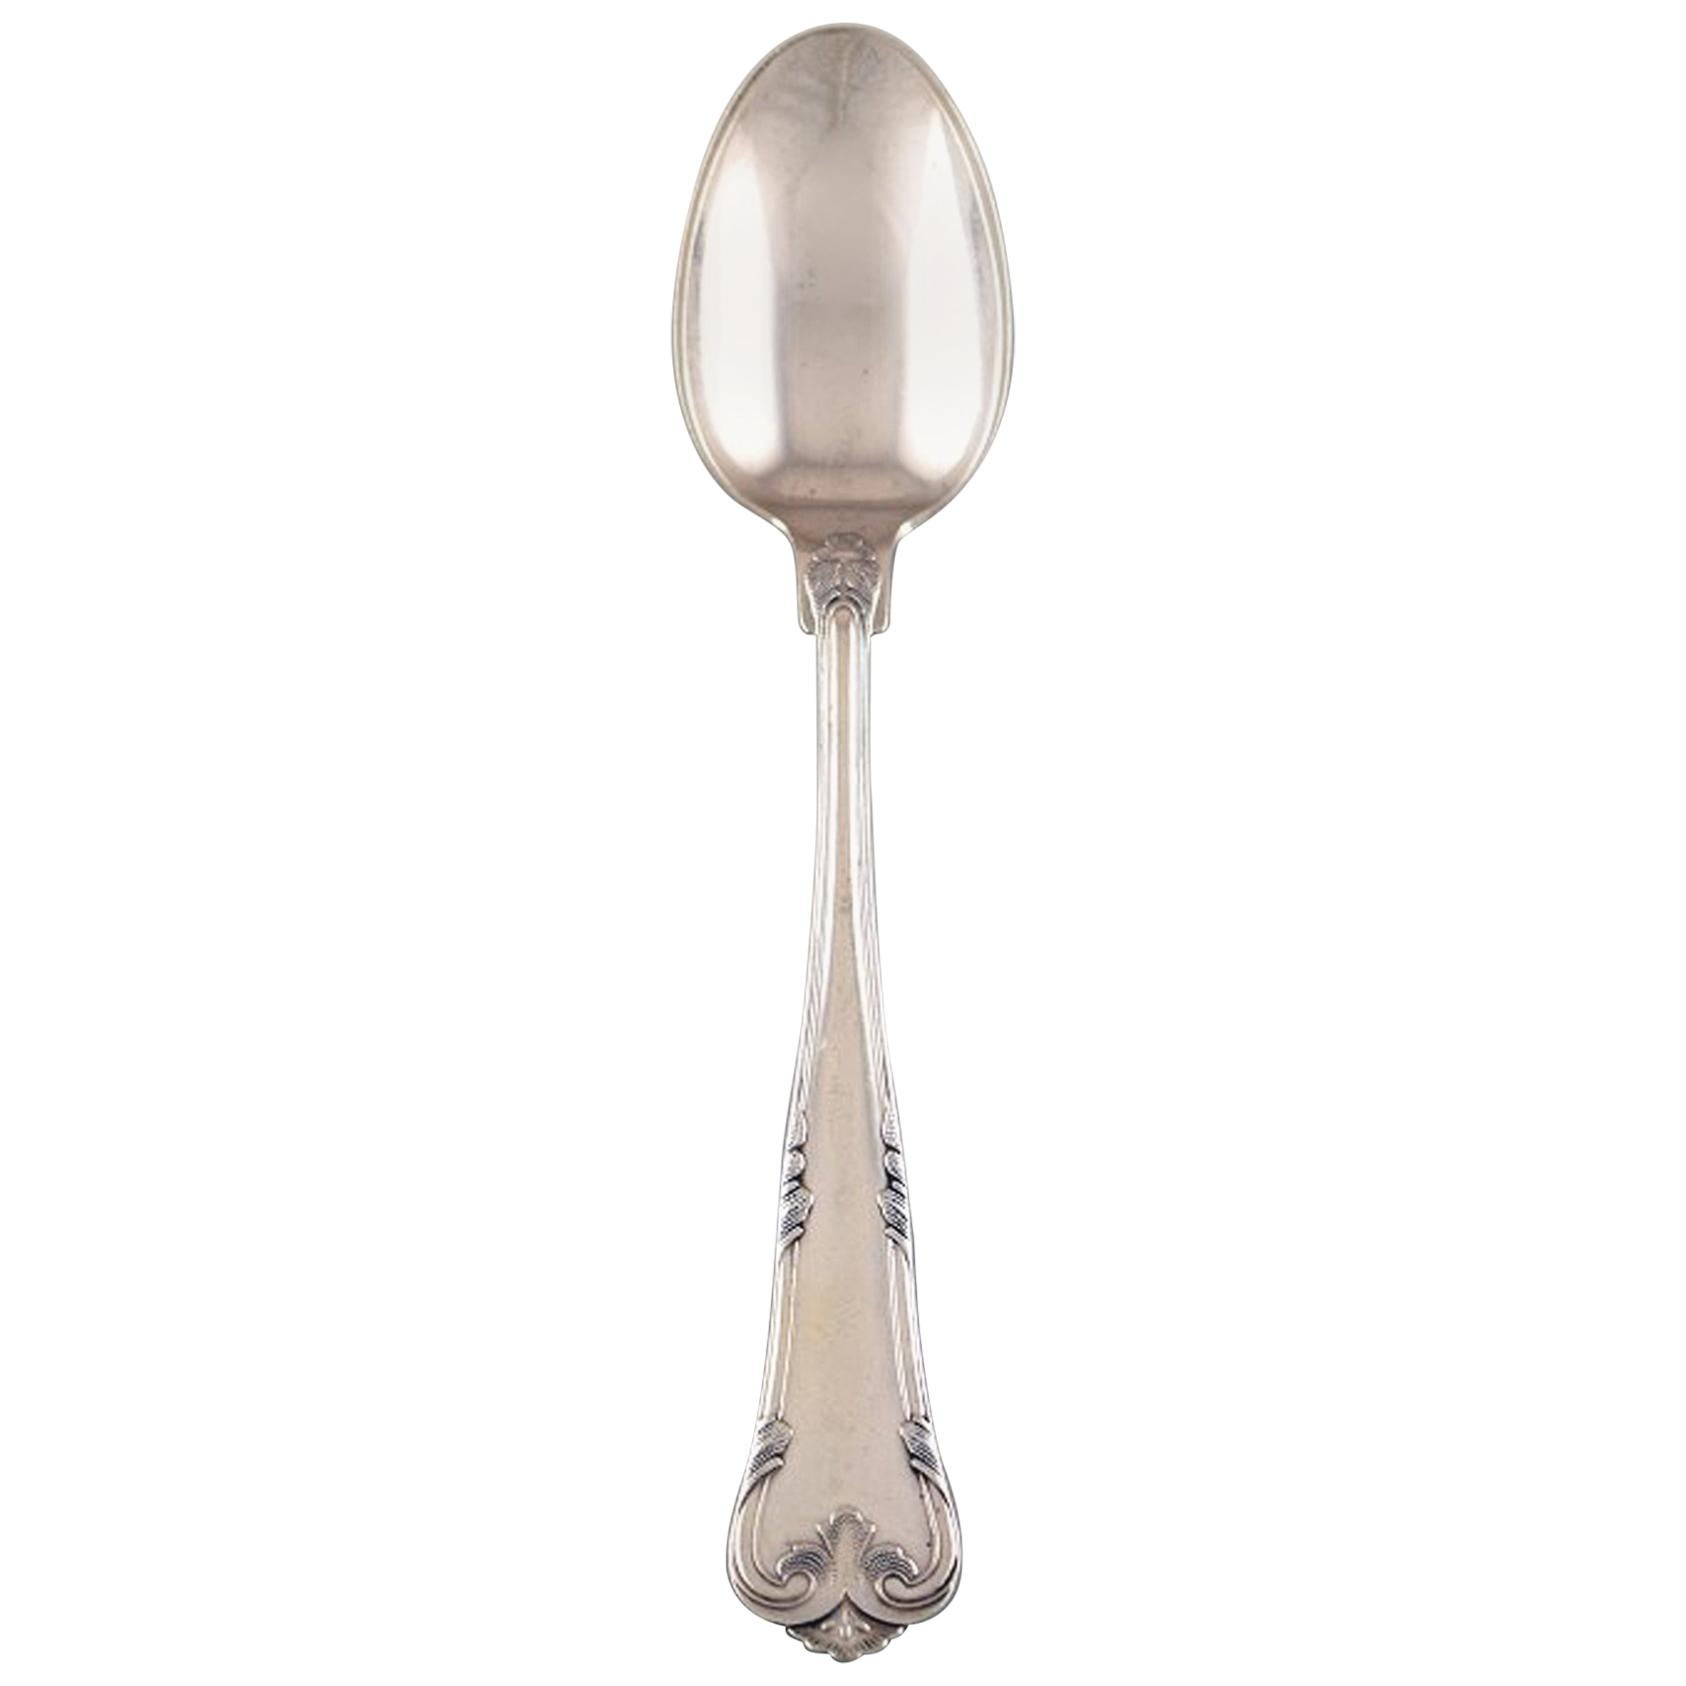 Tea Spoon, Cohr, Denmark "Herregaard" Silver Cutlery. 7 Spoons in Stock